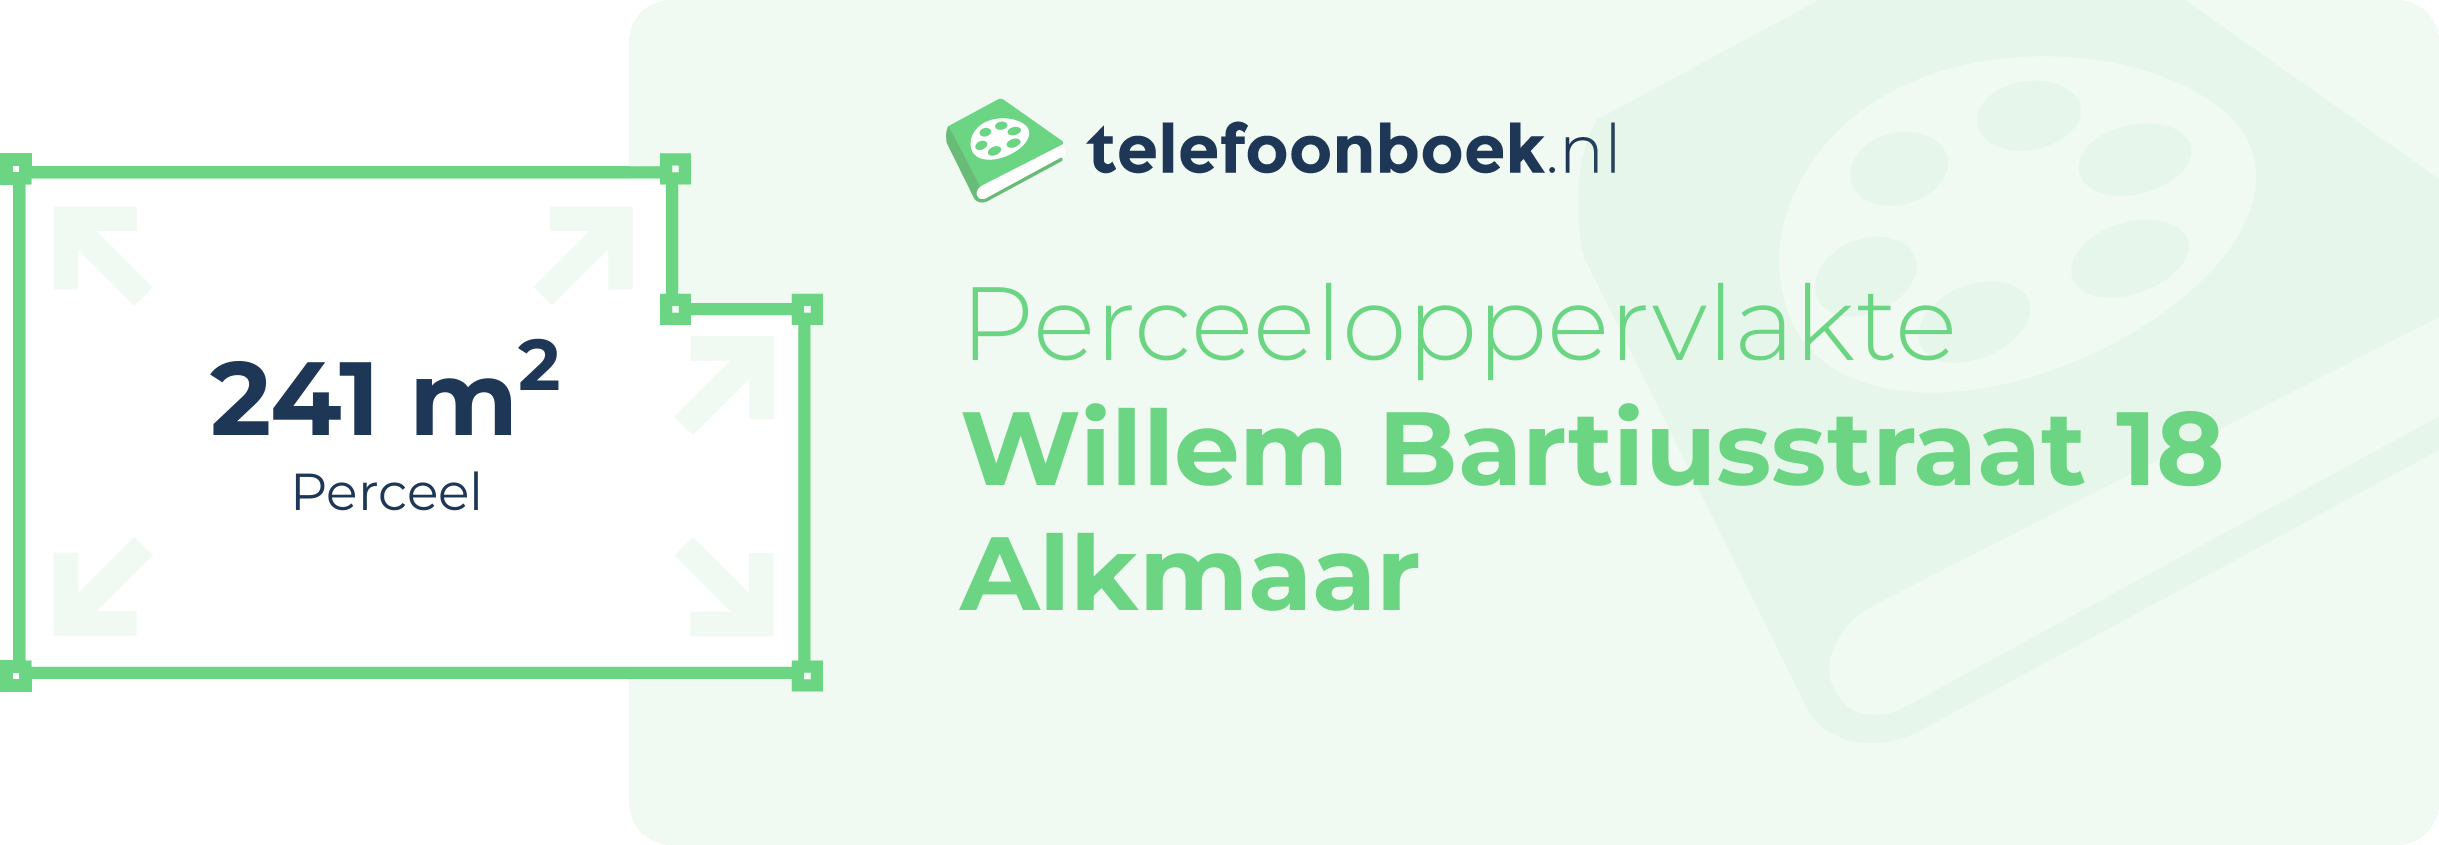 Perceeloppervlakte Willem Bartiusstraat 18 Alkmaar